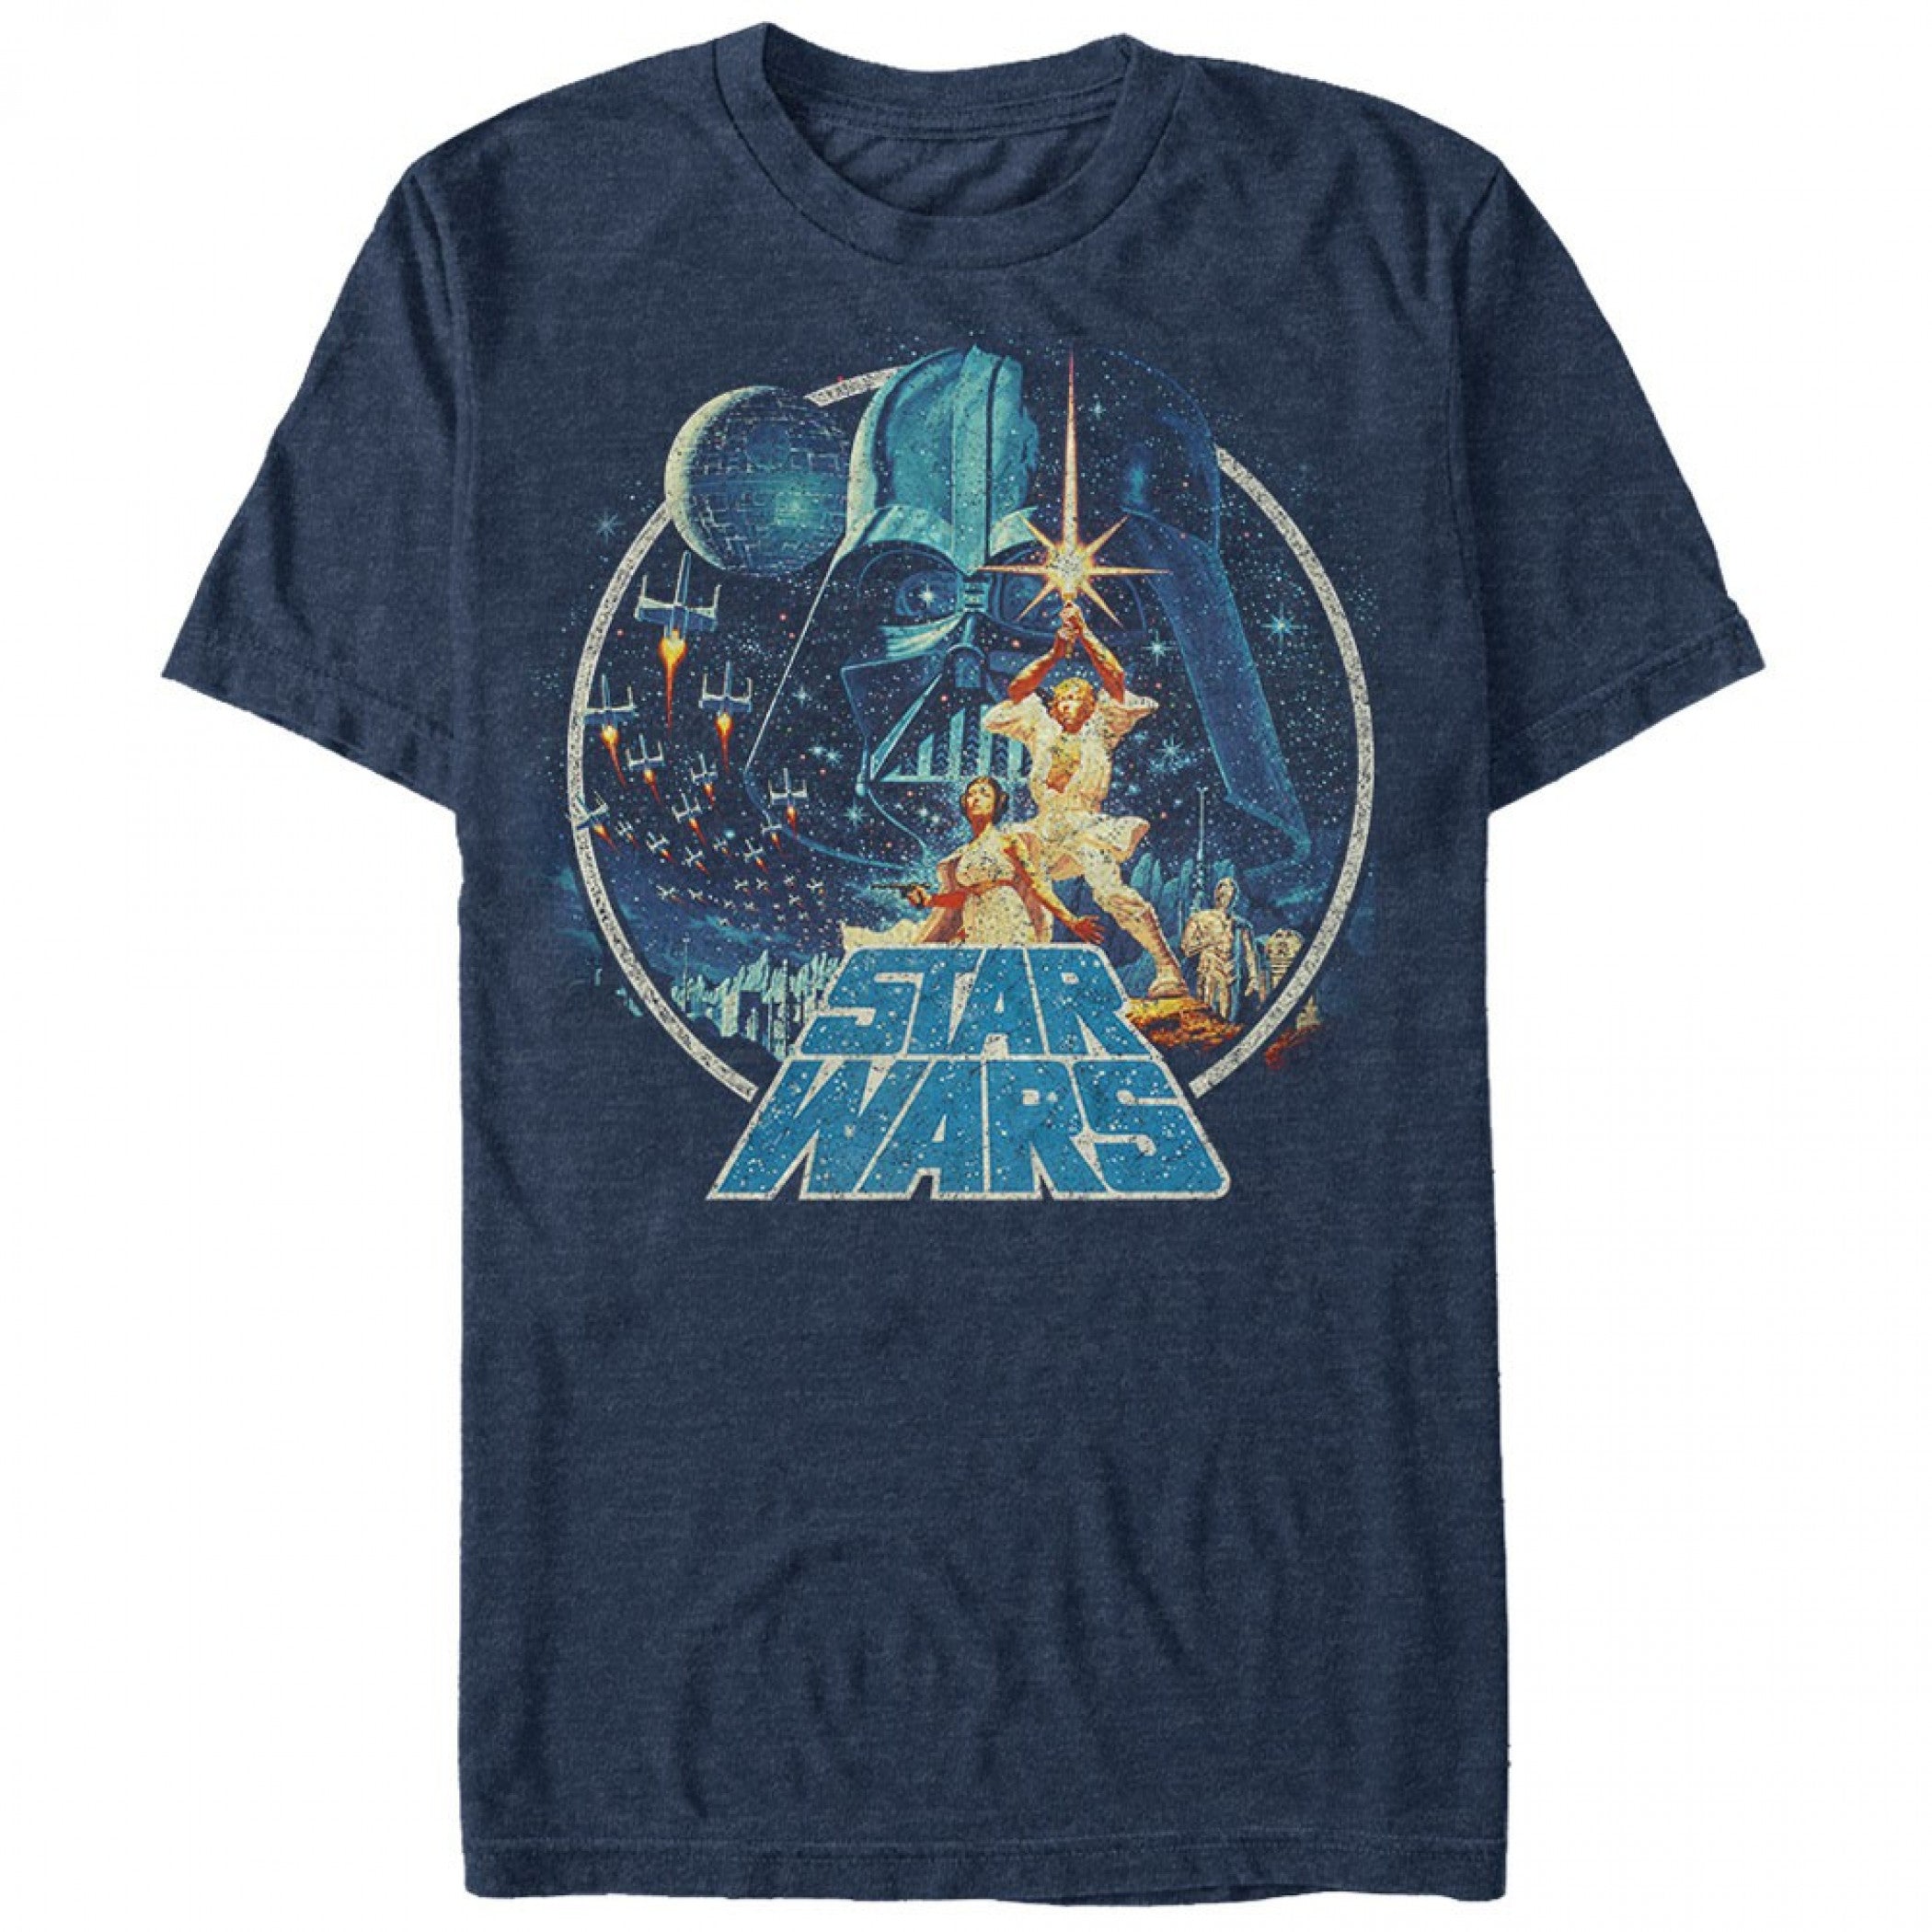 Star Wars Classic Scene Circle Men's T-Shirt